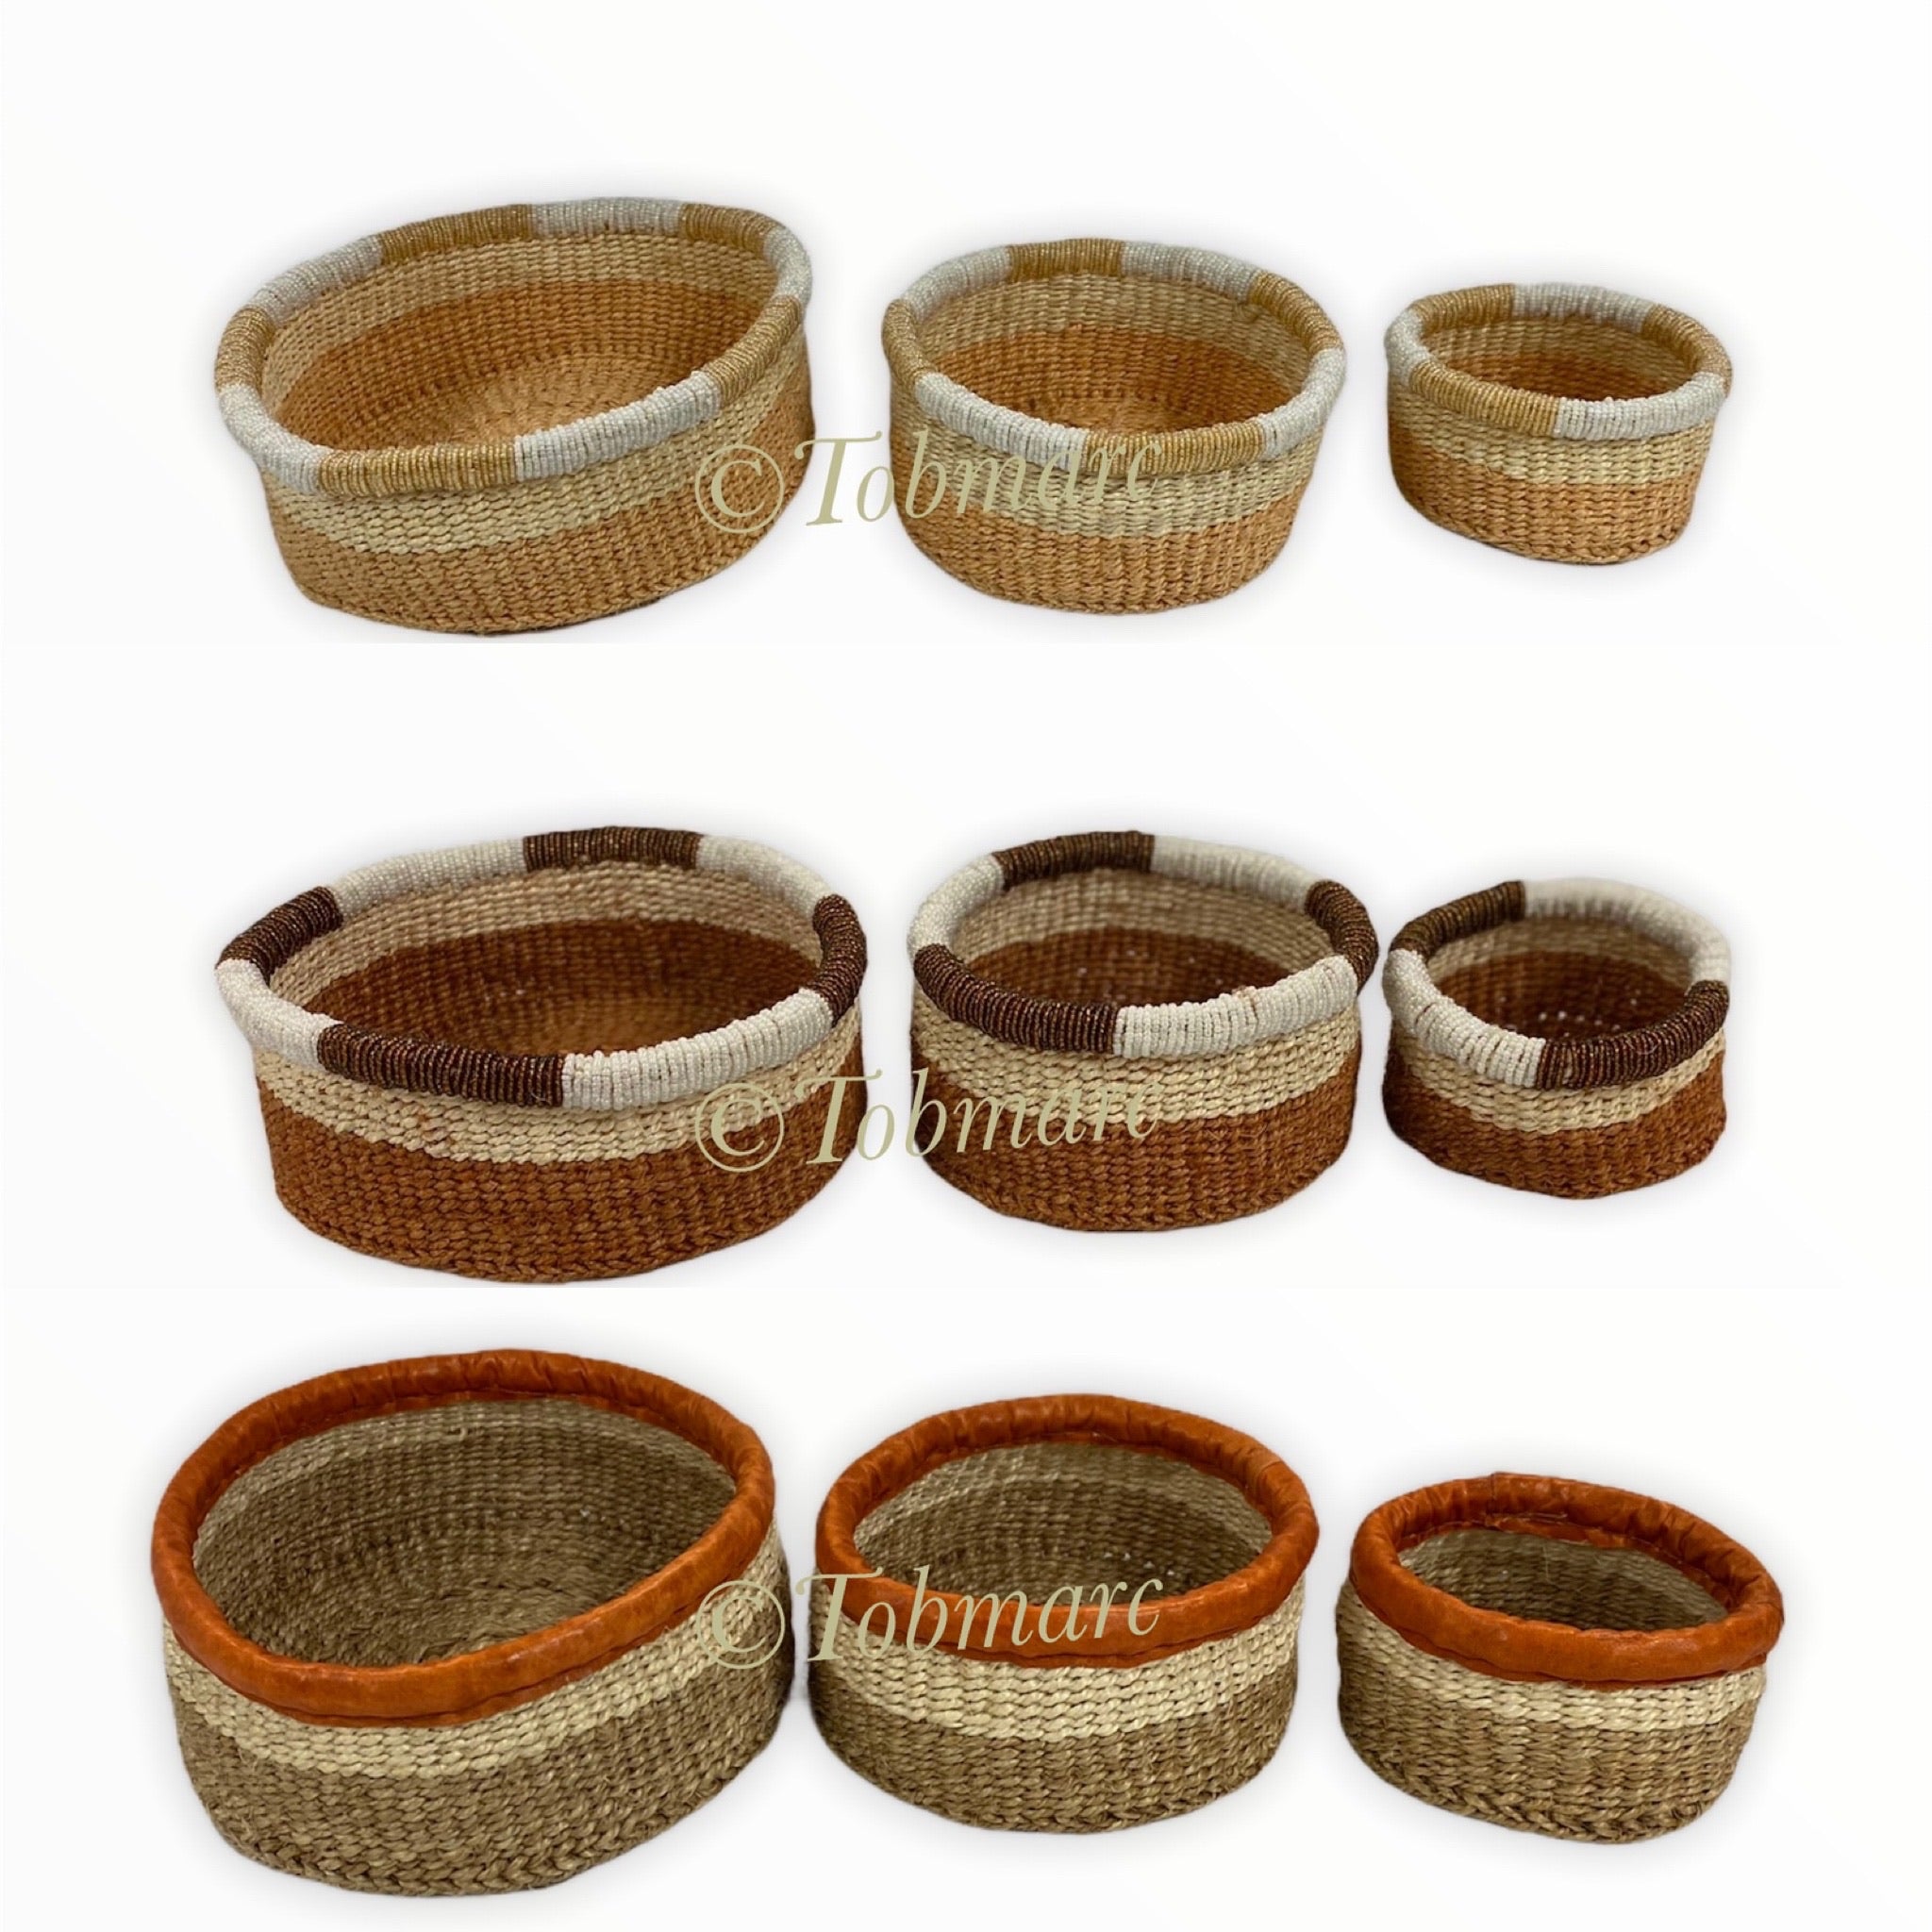 Nesting small basket , Jewelry holding baskets, Organizing Basket